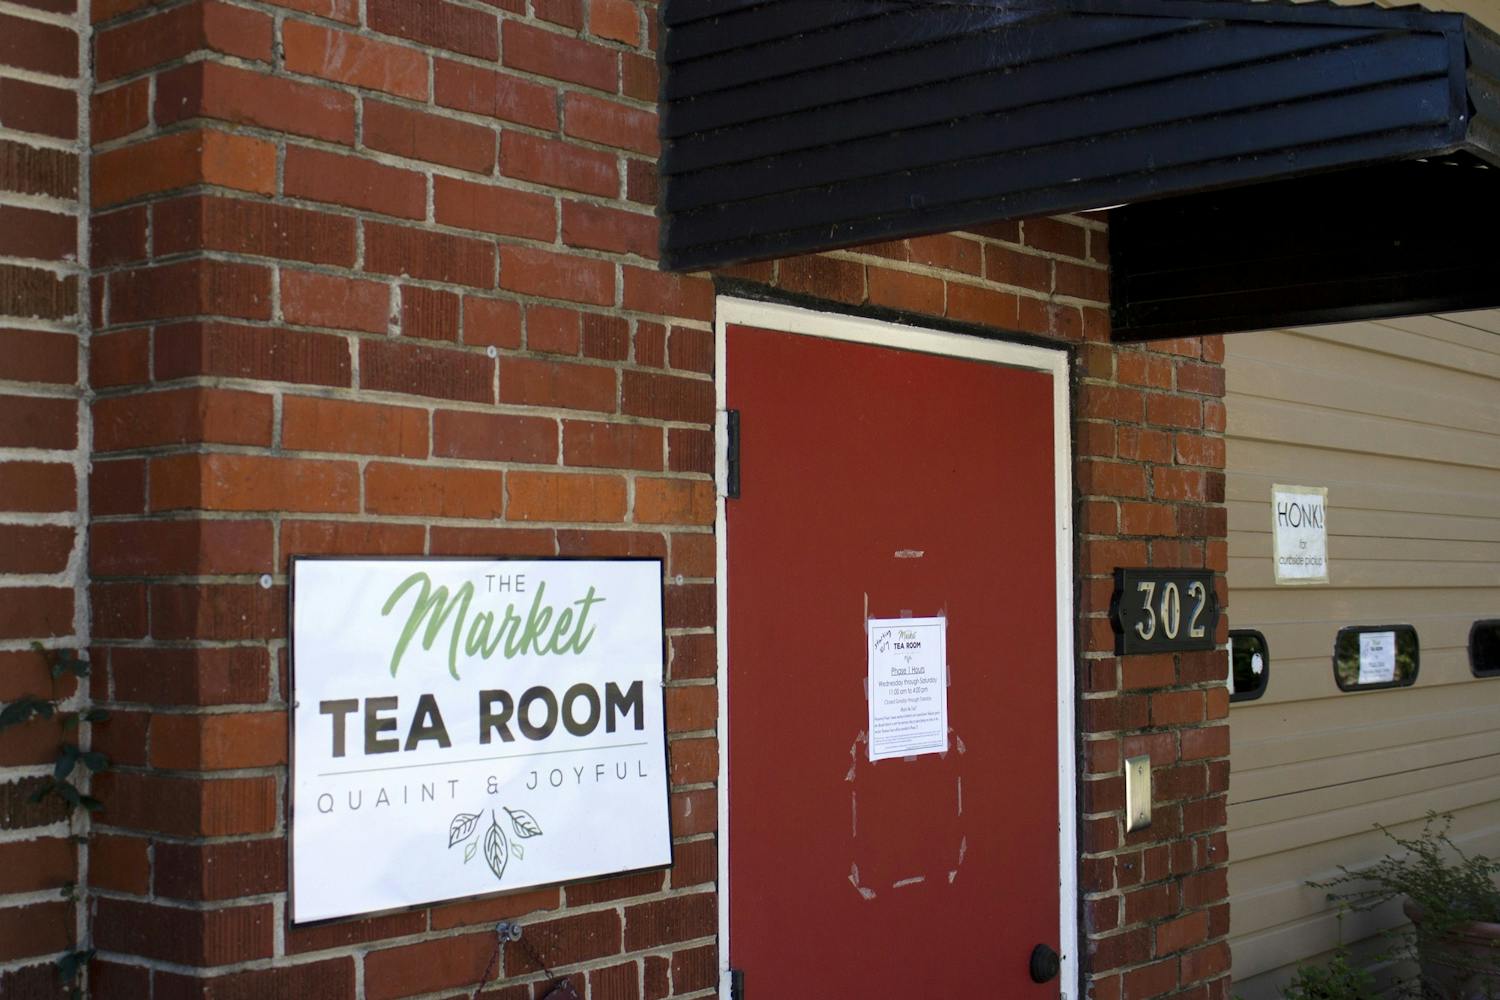 The Market Tea Room sits hidden in a back corner off Senate Street. It is reopening Oct. 7.